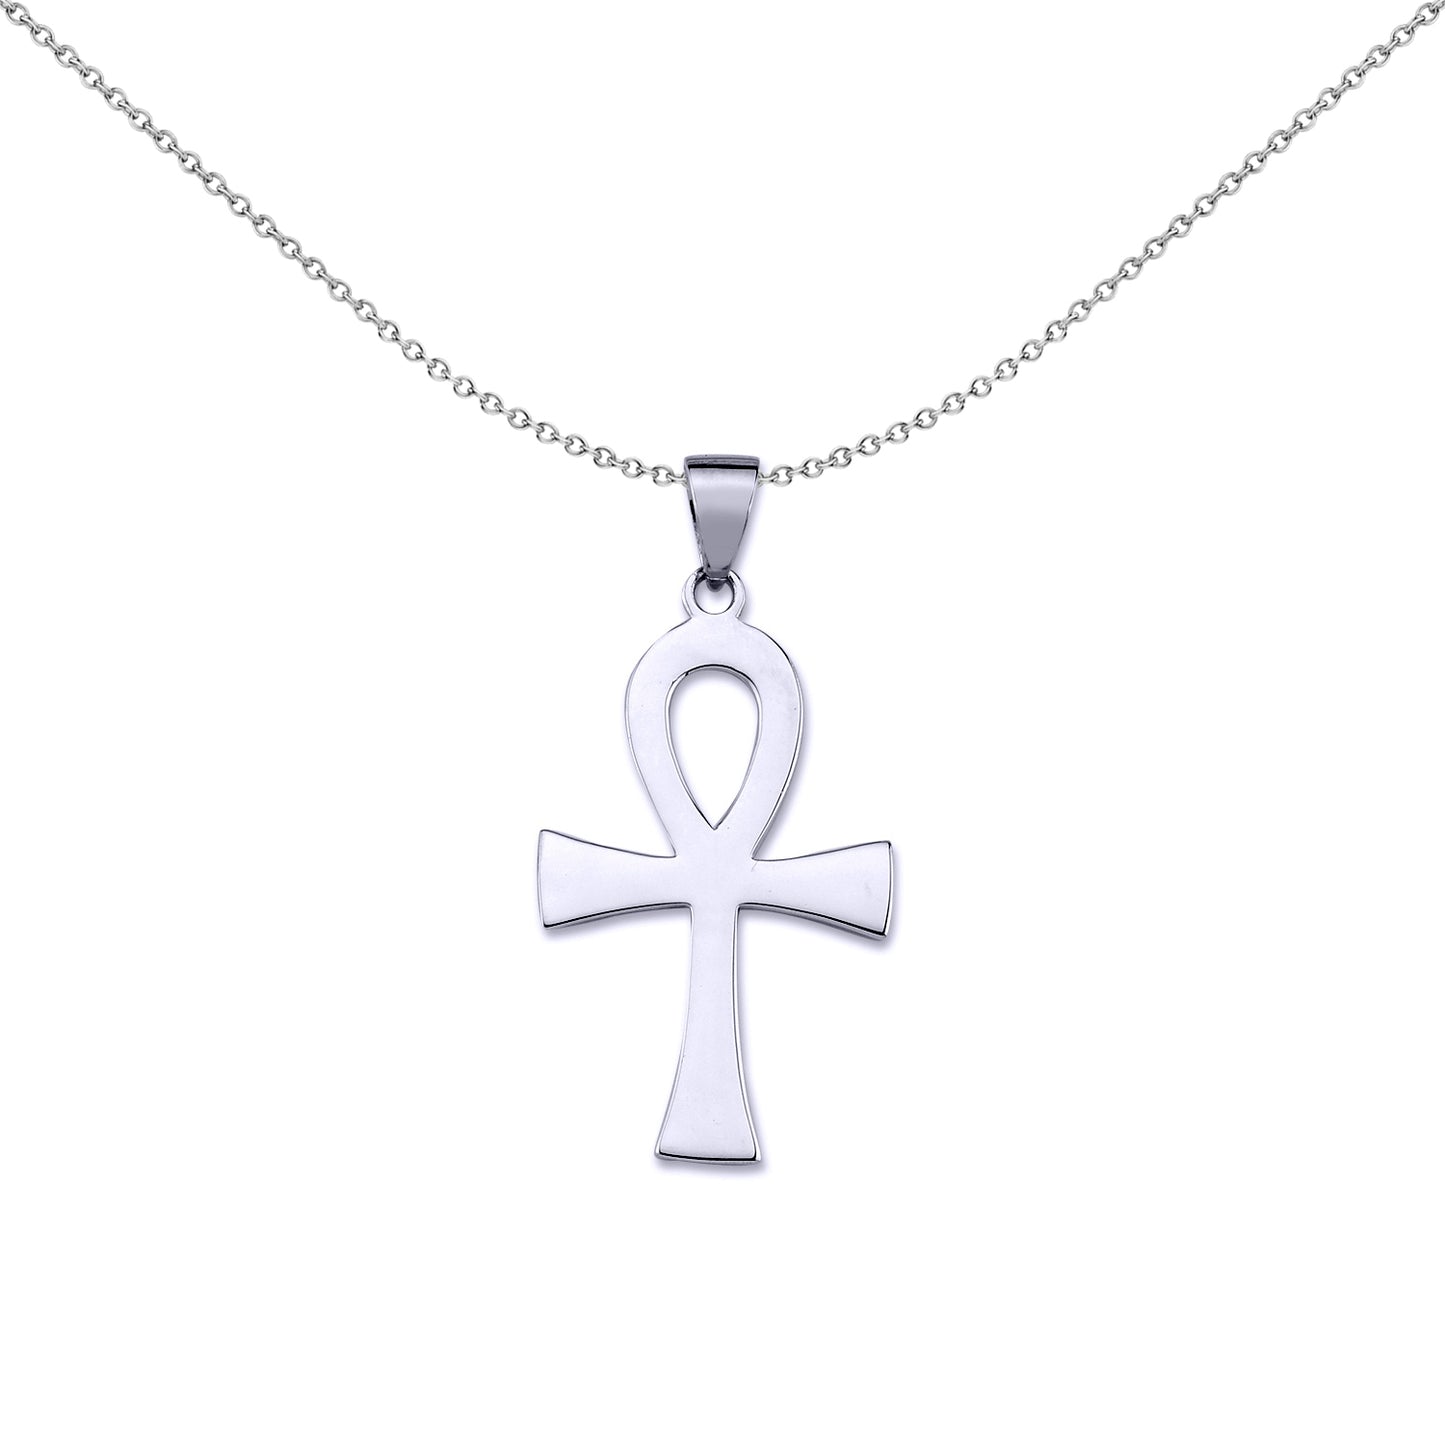 Unisex Silver  Polished Ankh Cross Pendant Necklace 18 inch - GVX048